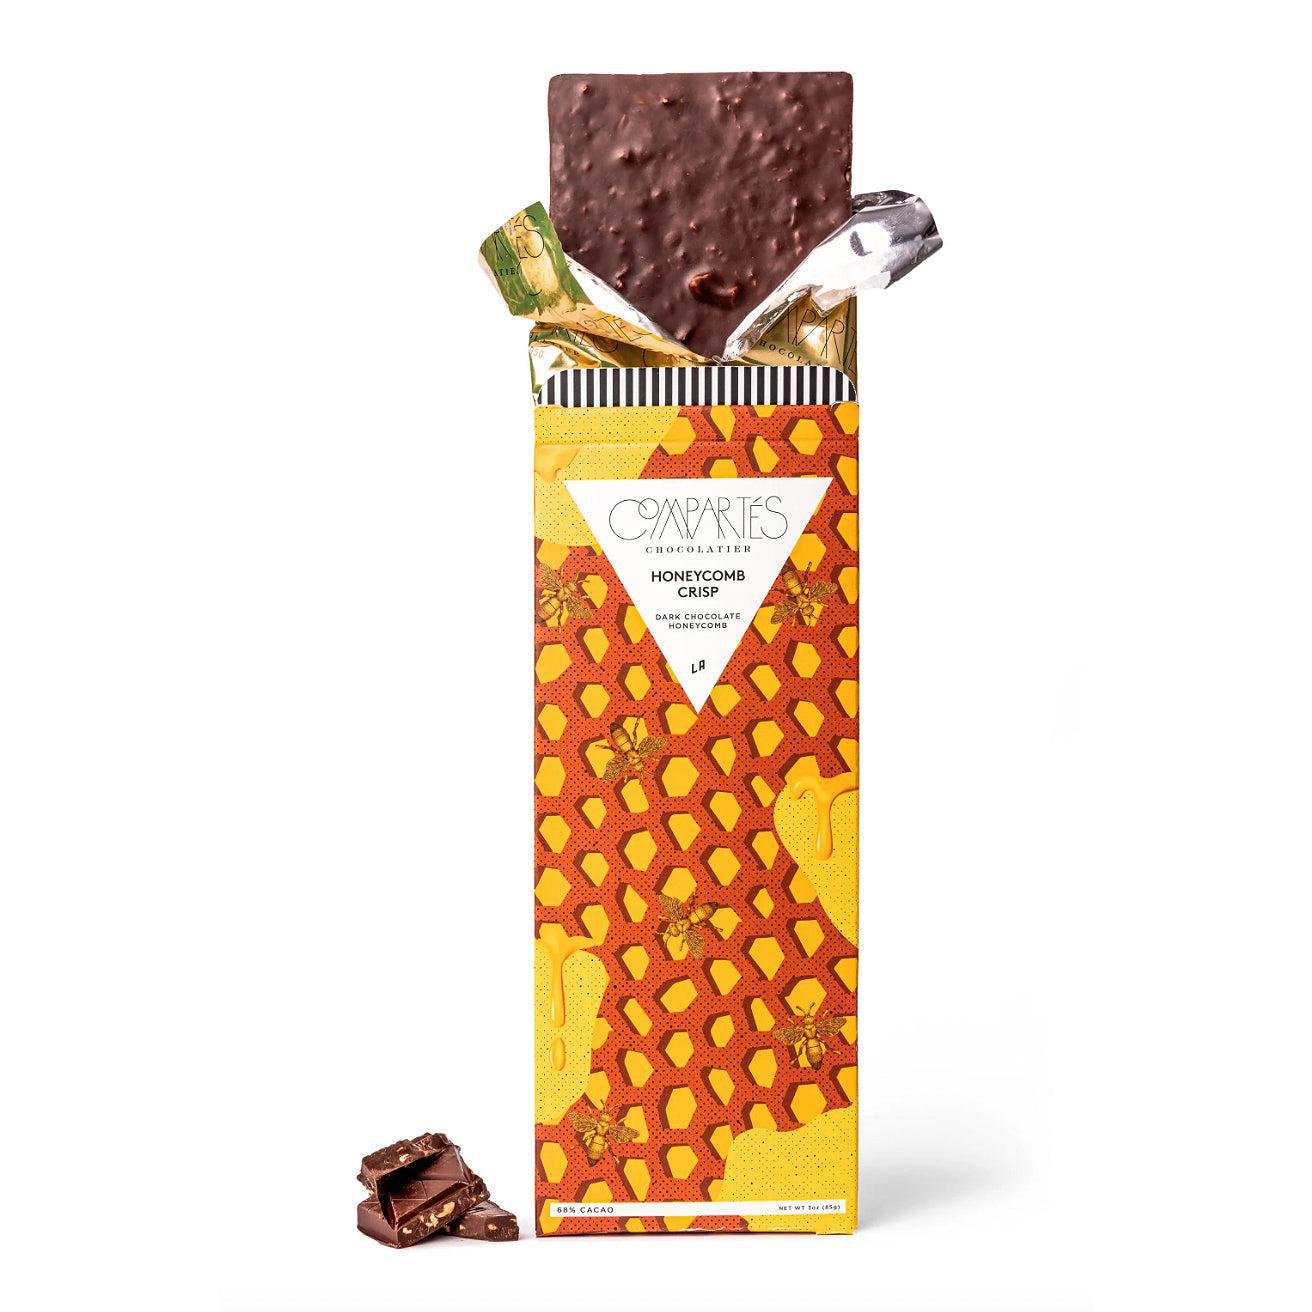 Compartes - 'Honeycomb Crisp' Dark Chocolate w/ Honeycomb (3OZ | 68%)